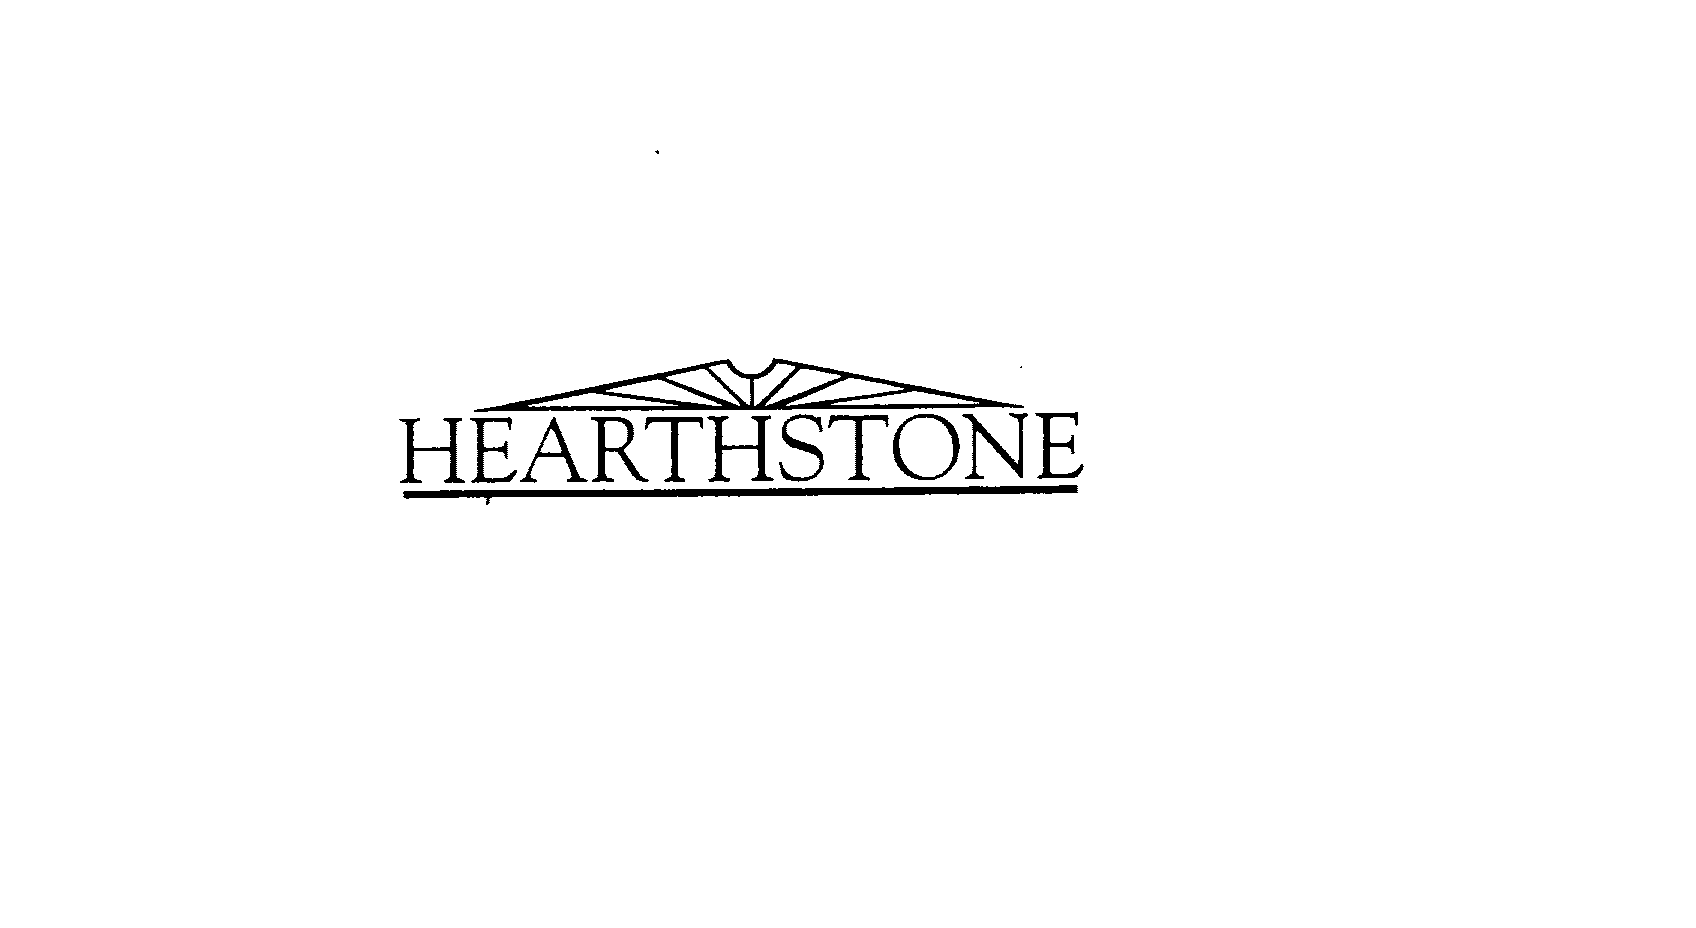 HEARTHSTONE